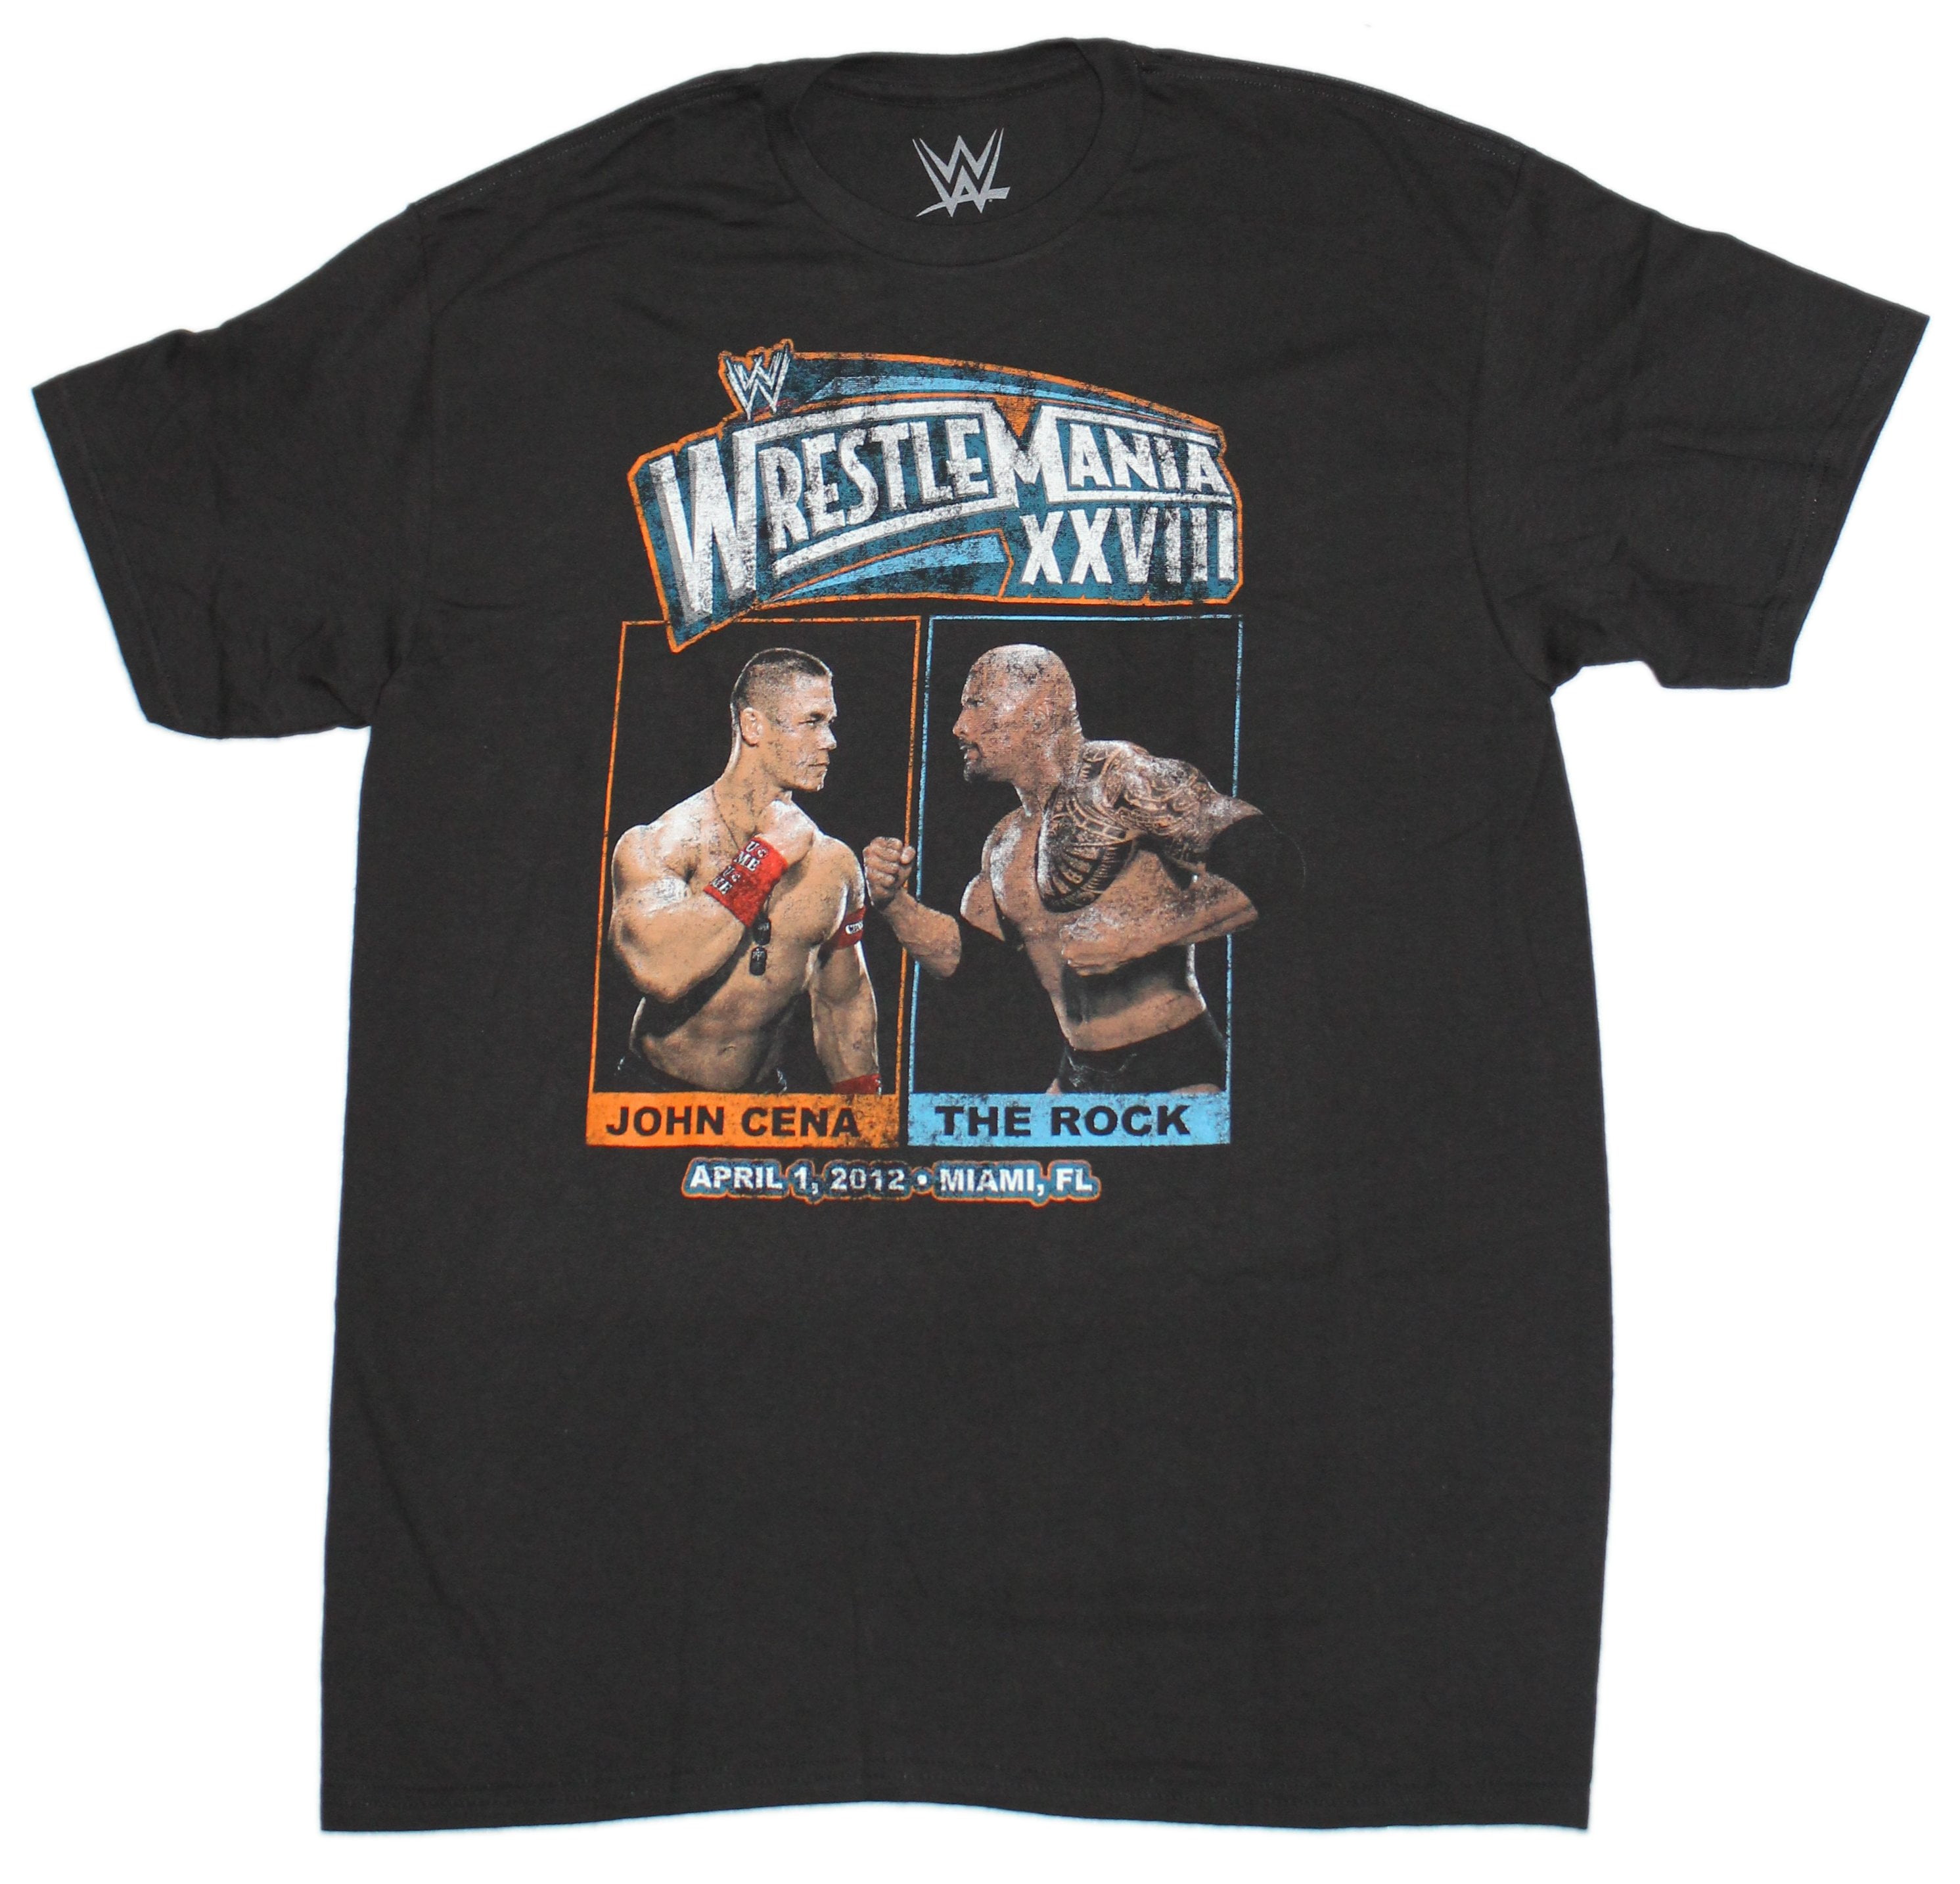 WWE Mens T-Shirt - Wrestlemania John Cena vs The Rock (Small)